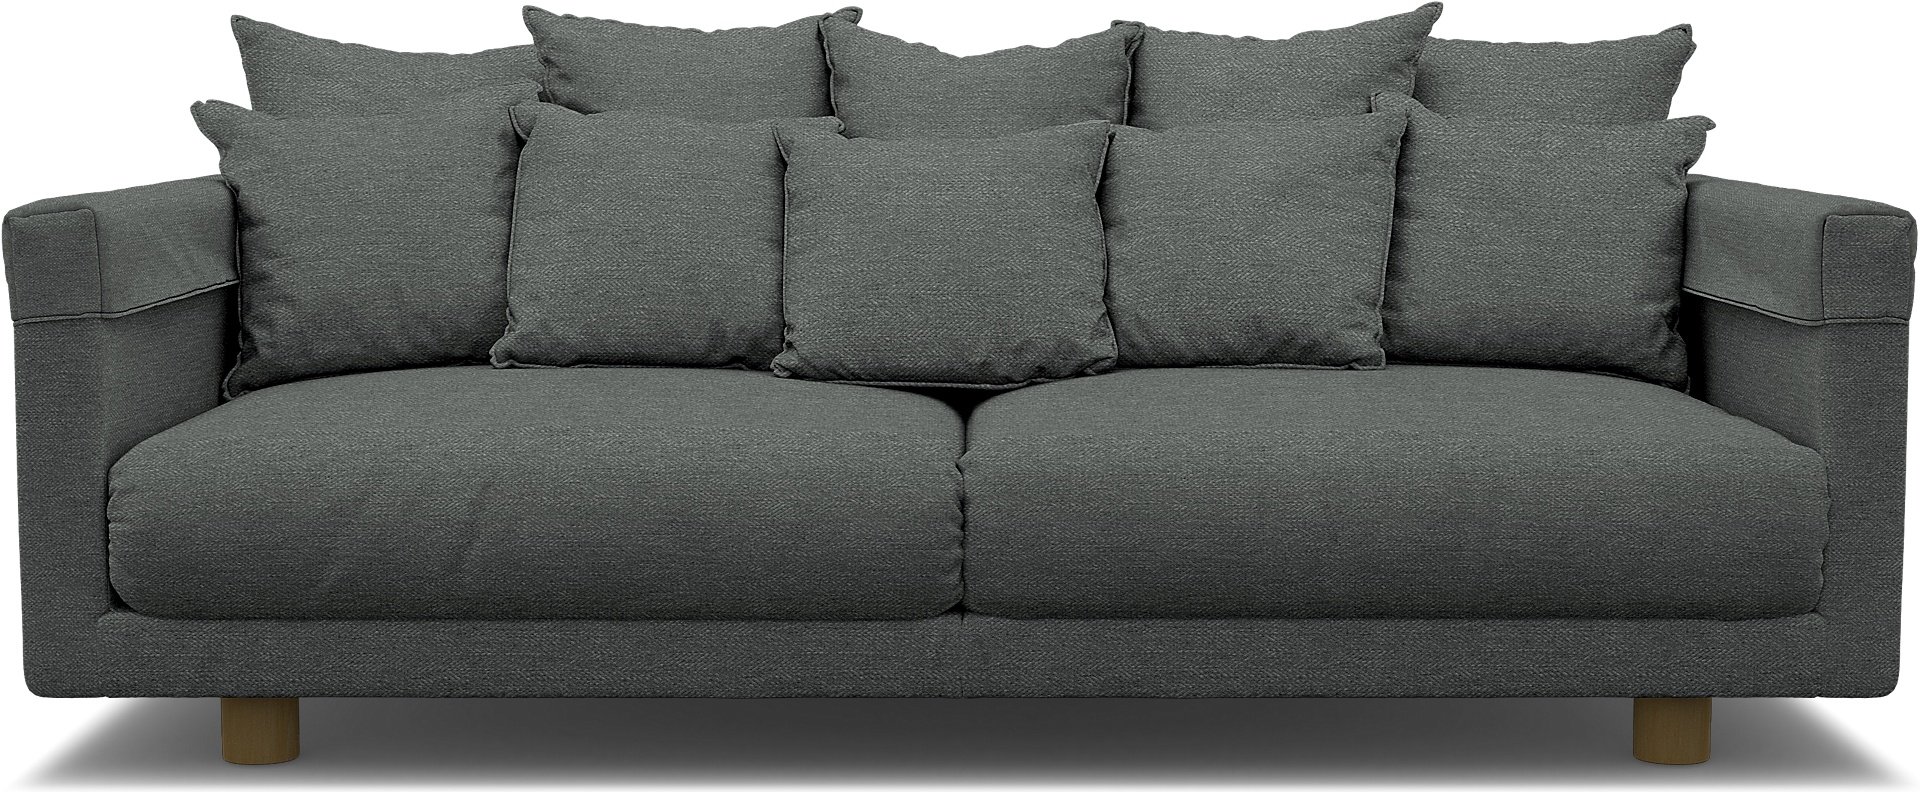 IKEA - Stockholm 2017 3 Seater Sofa Cover, Laurel, Boucle & Texture - Bemz